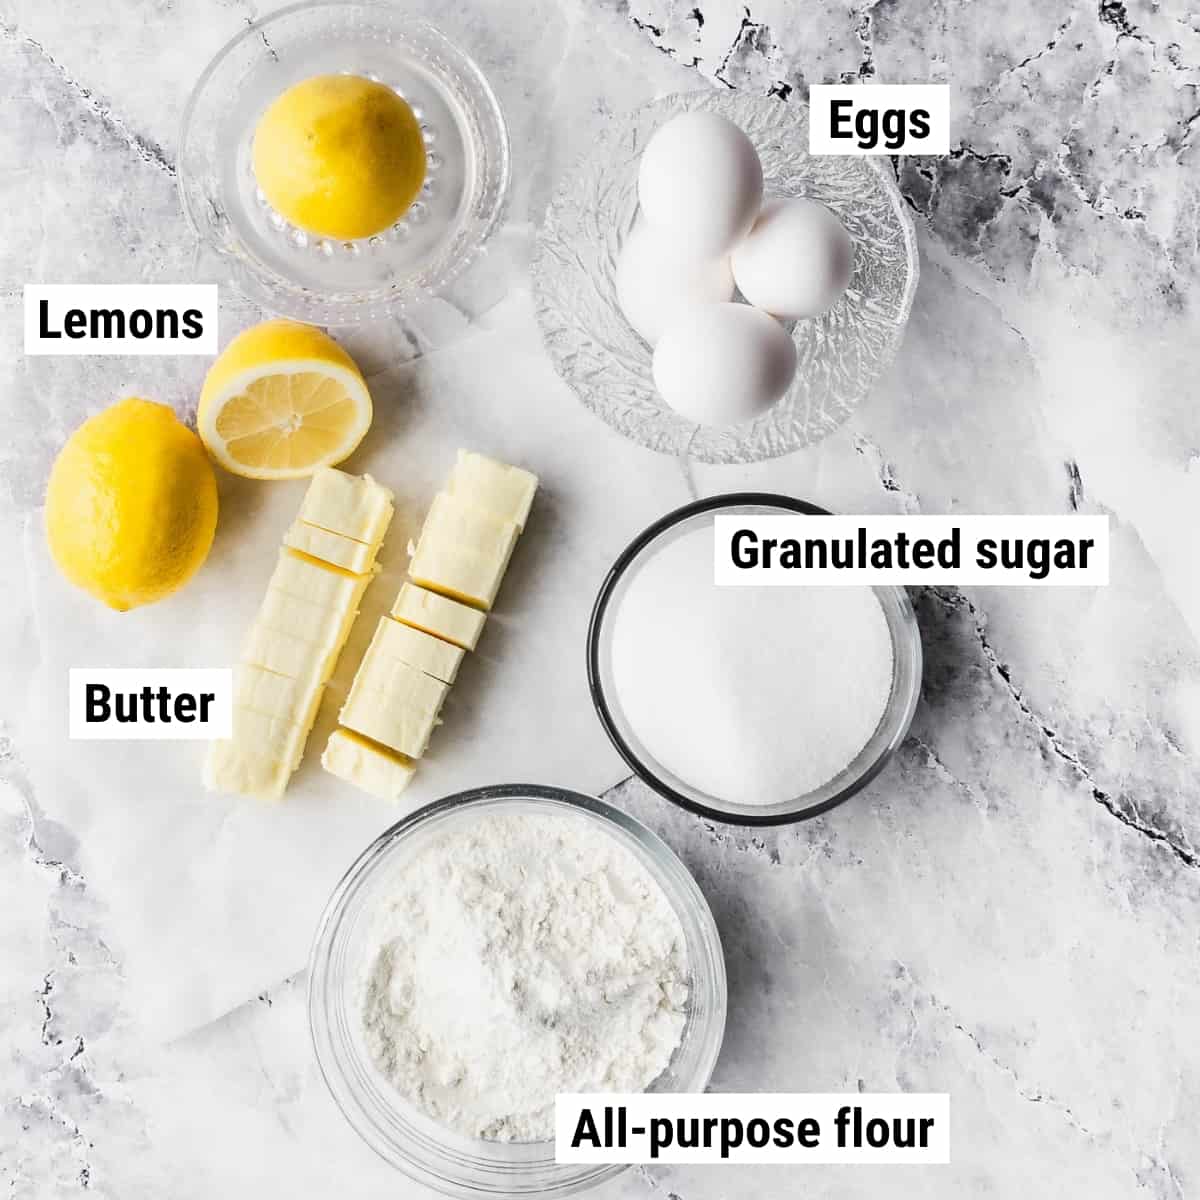 The ingredients to make Meyer lemon bars.